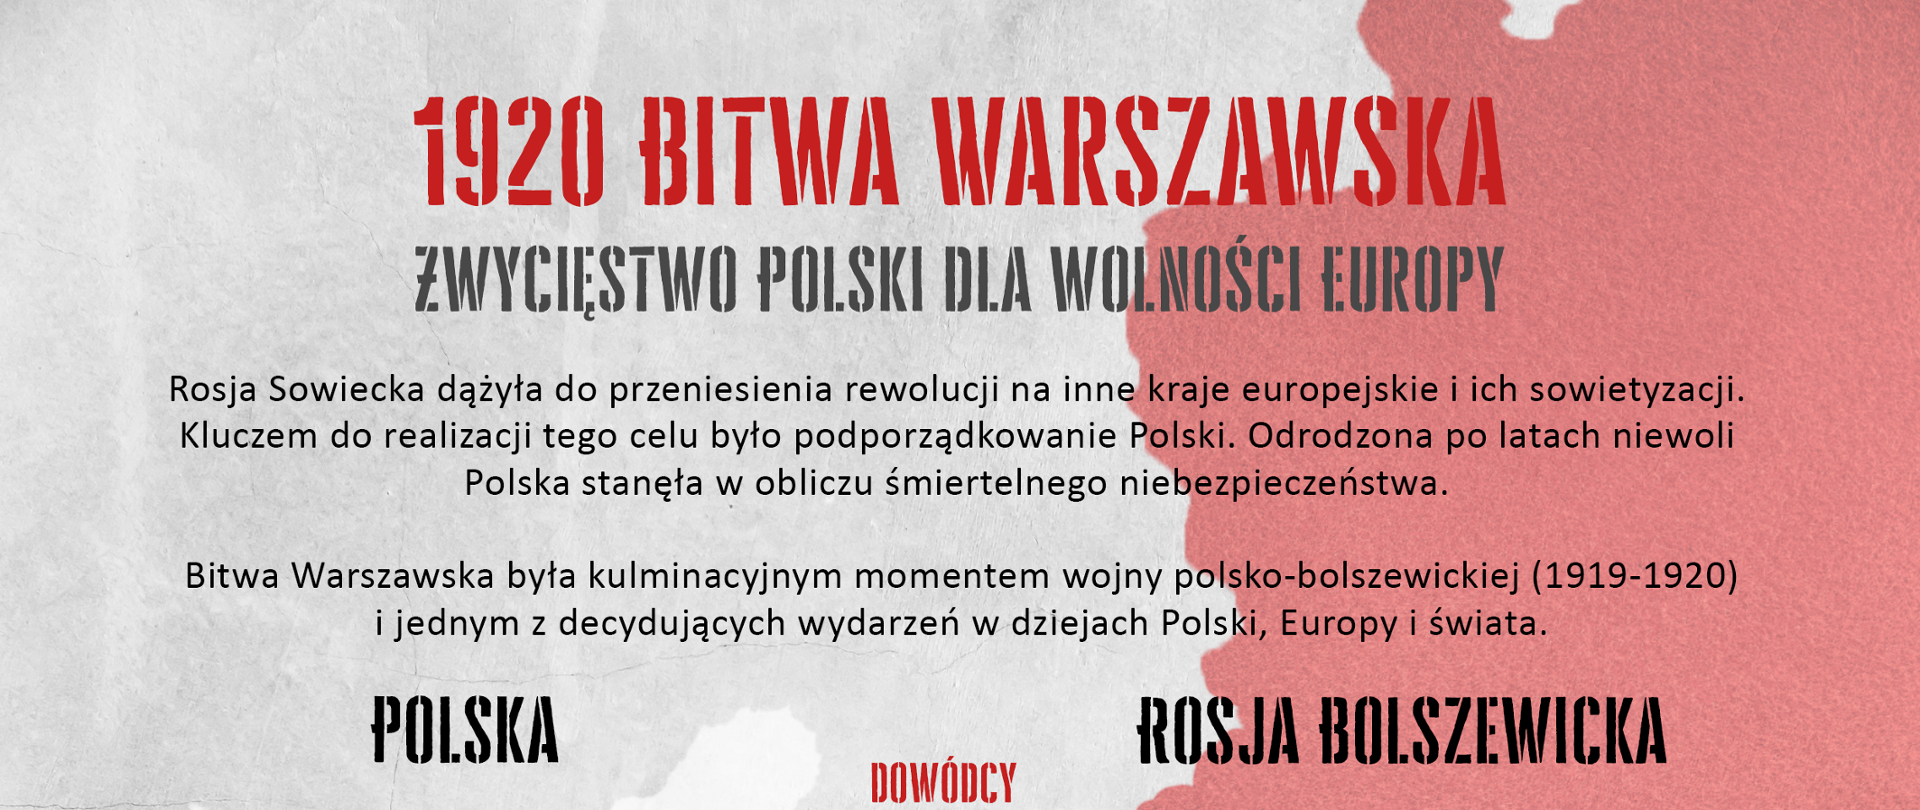 bitwa warszawska 